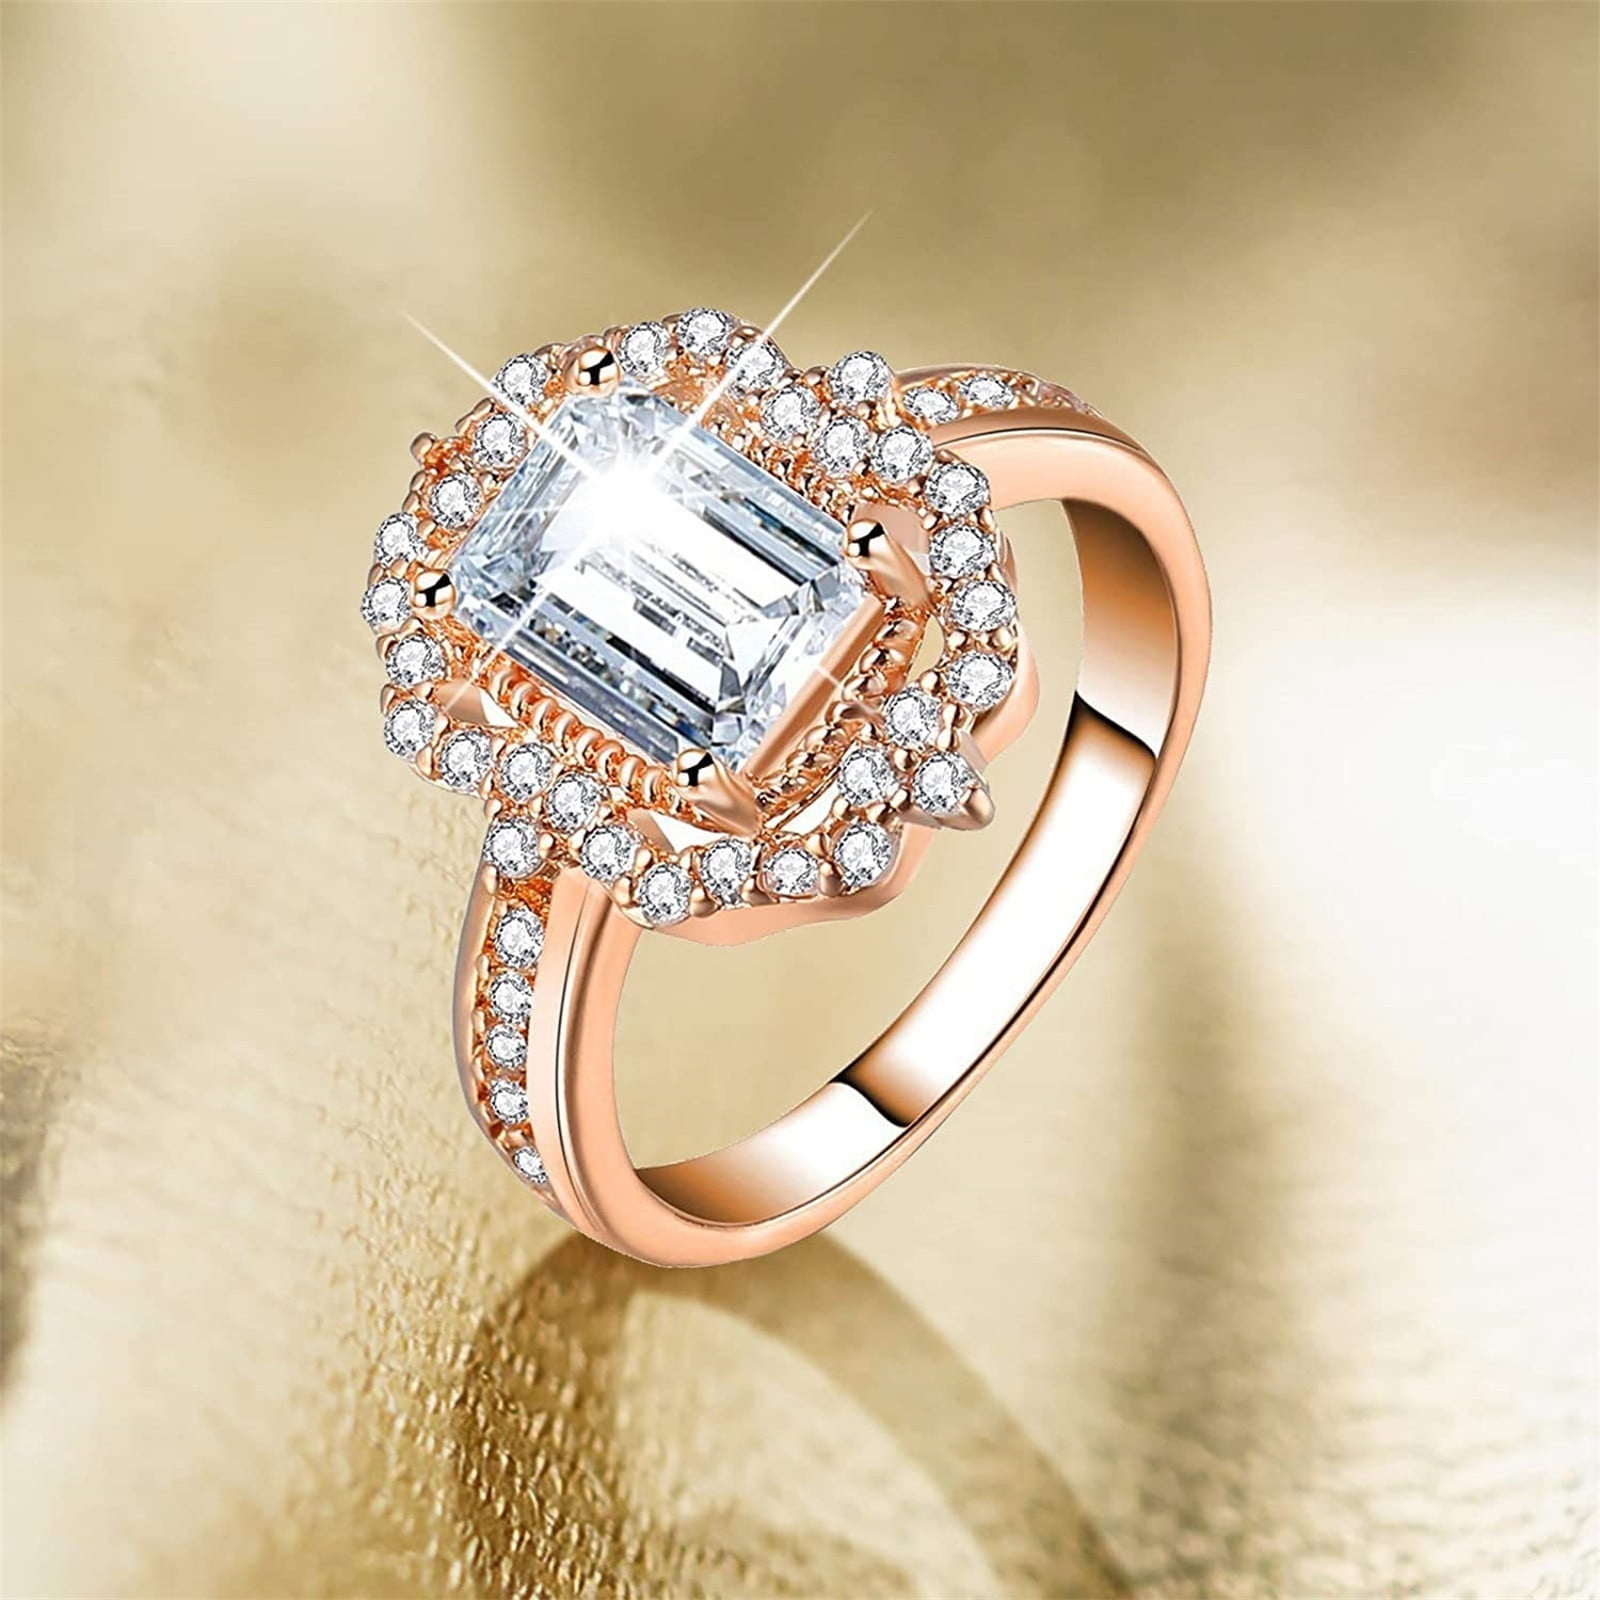 Sale! Tsavorite Garnet Ring - Larc Jewelers